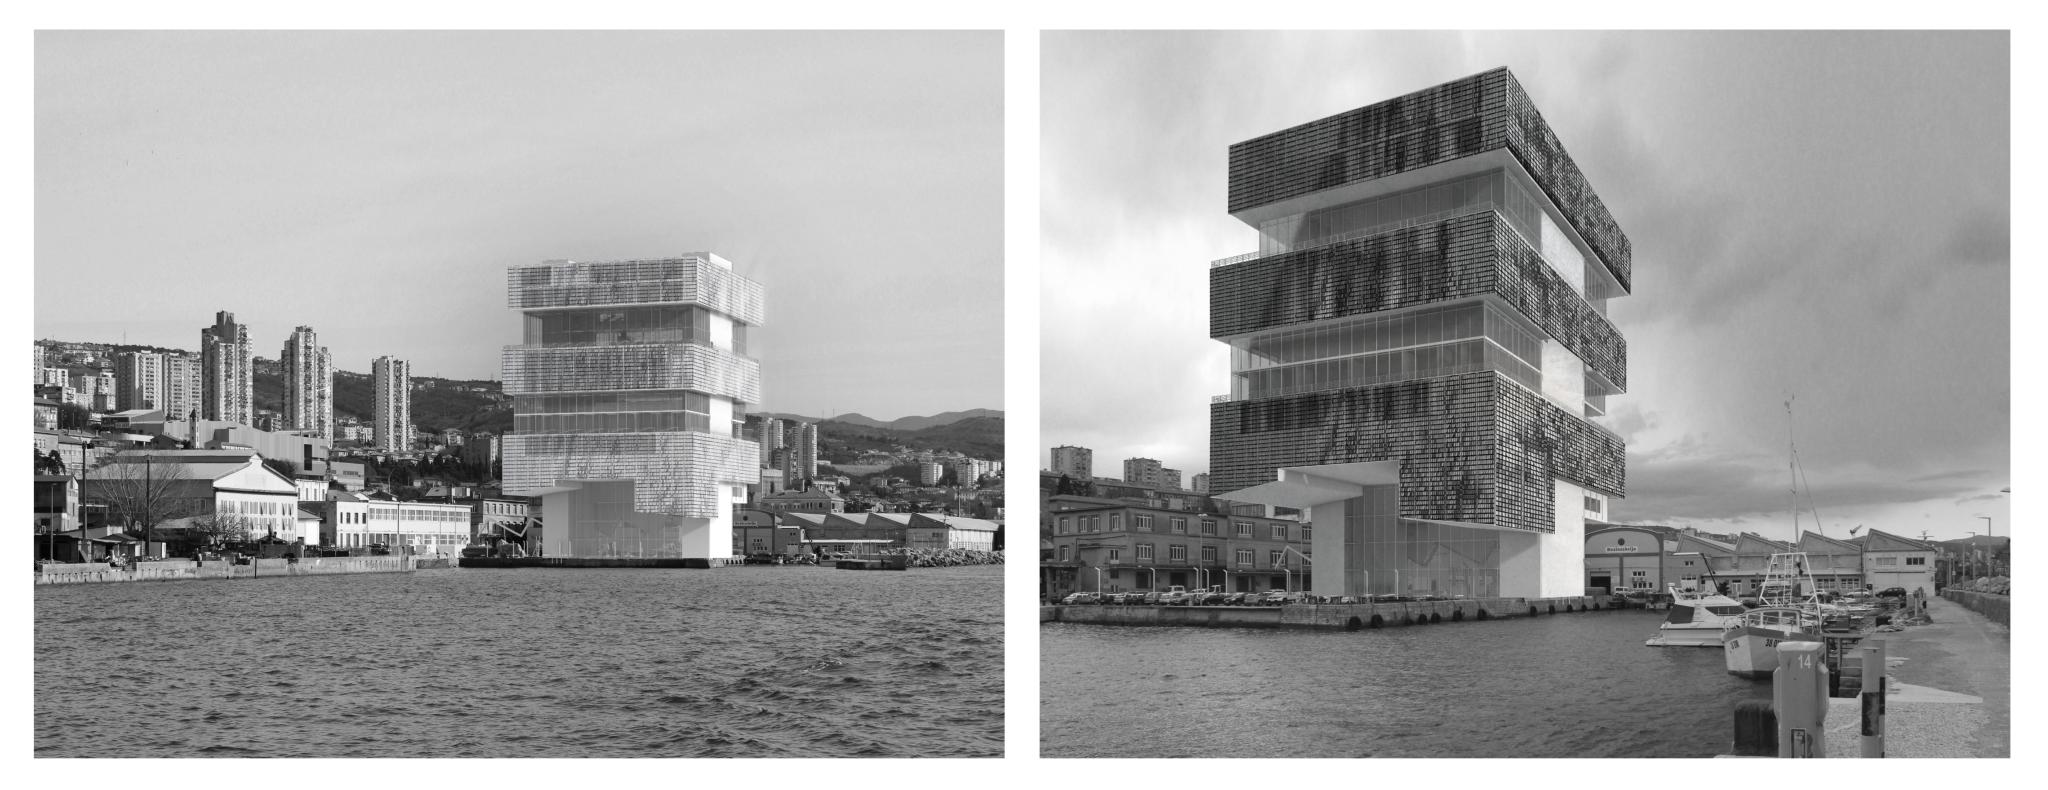 Student work, design of the reimagined Rijeka harbour